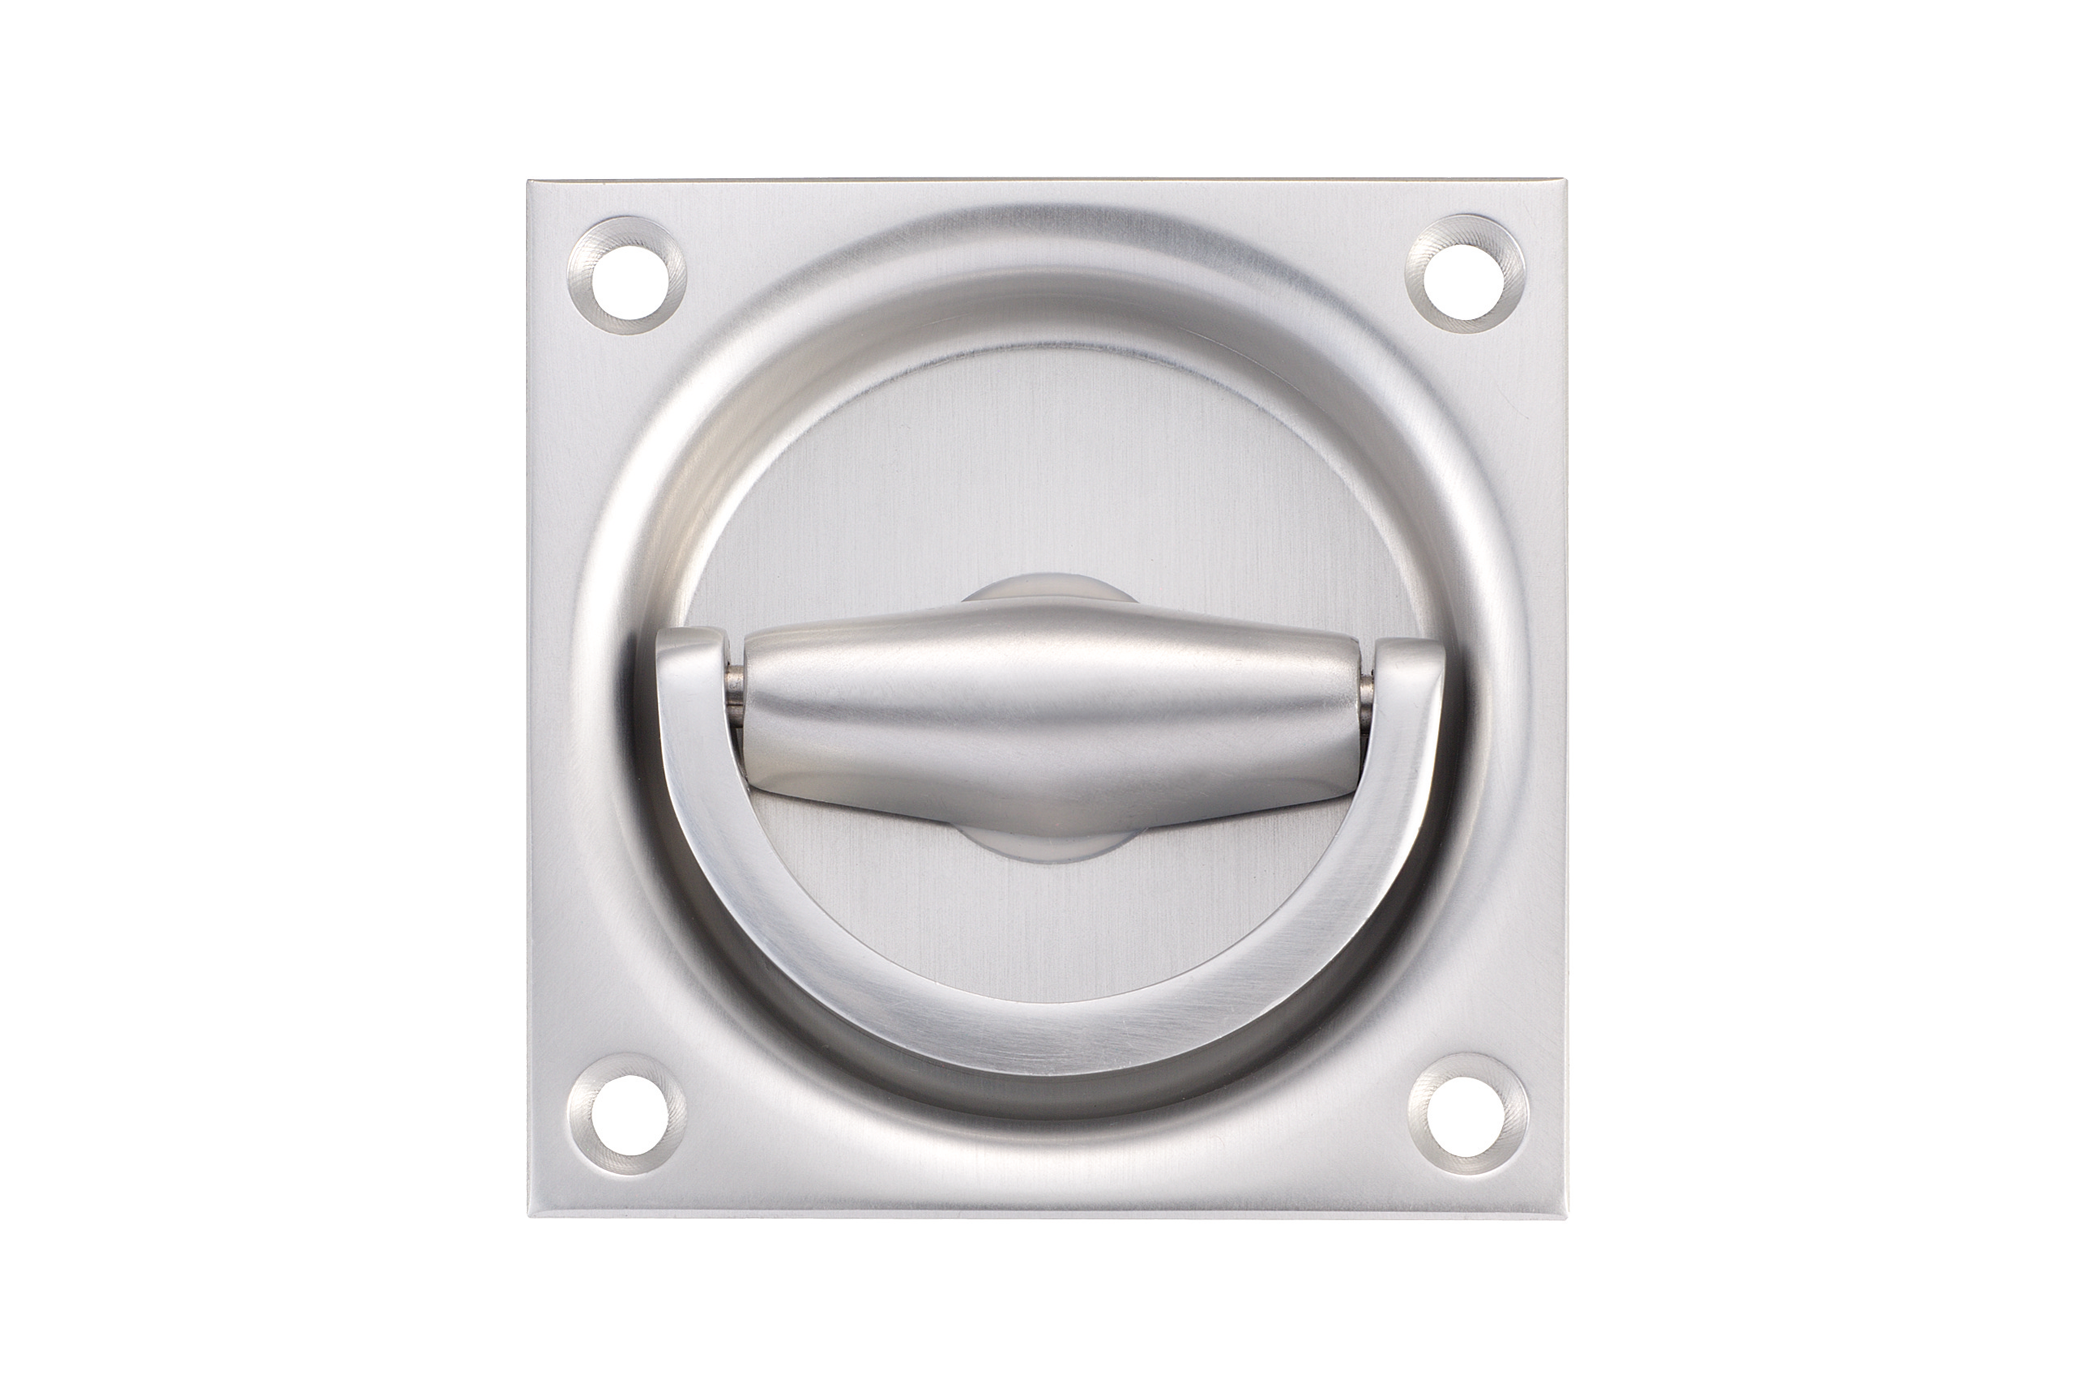 KWS Flush handle 5013 in finish 31 (aluminium, KWS 1 silver anodised)